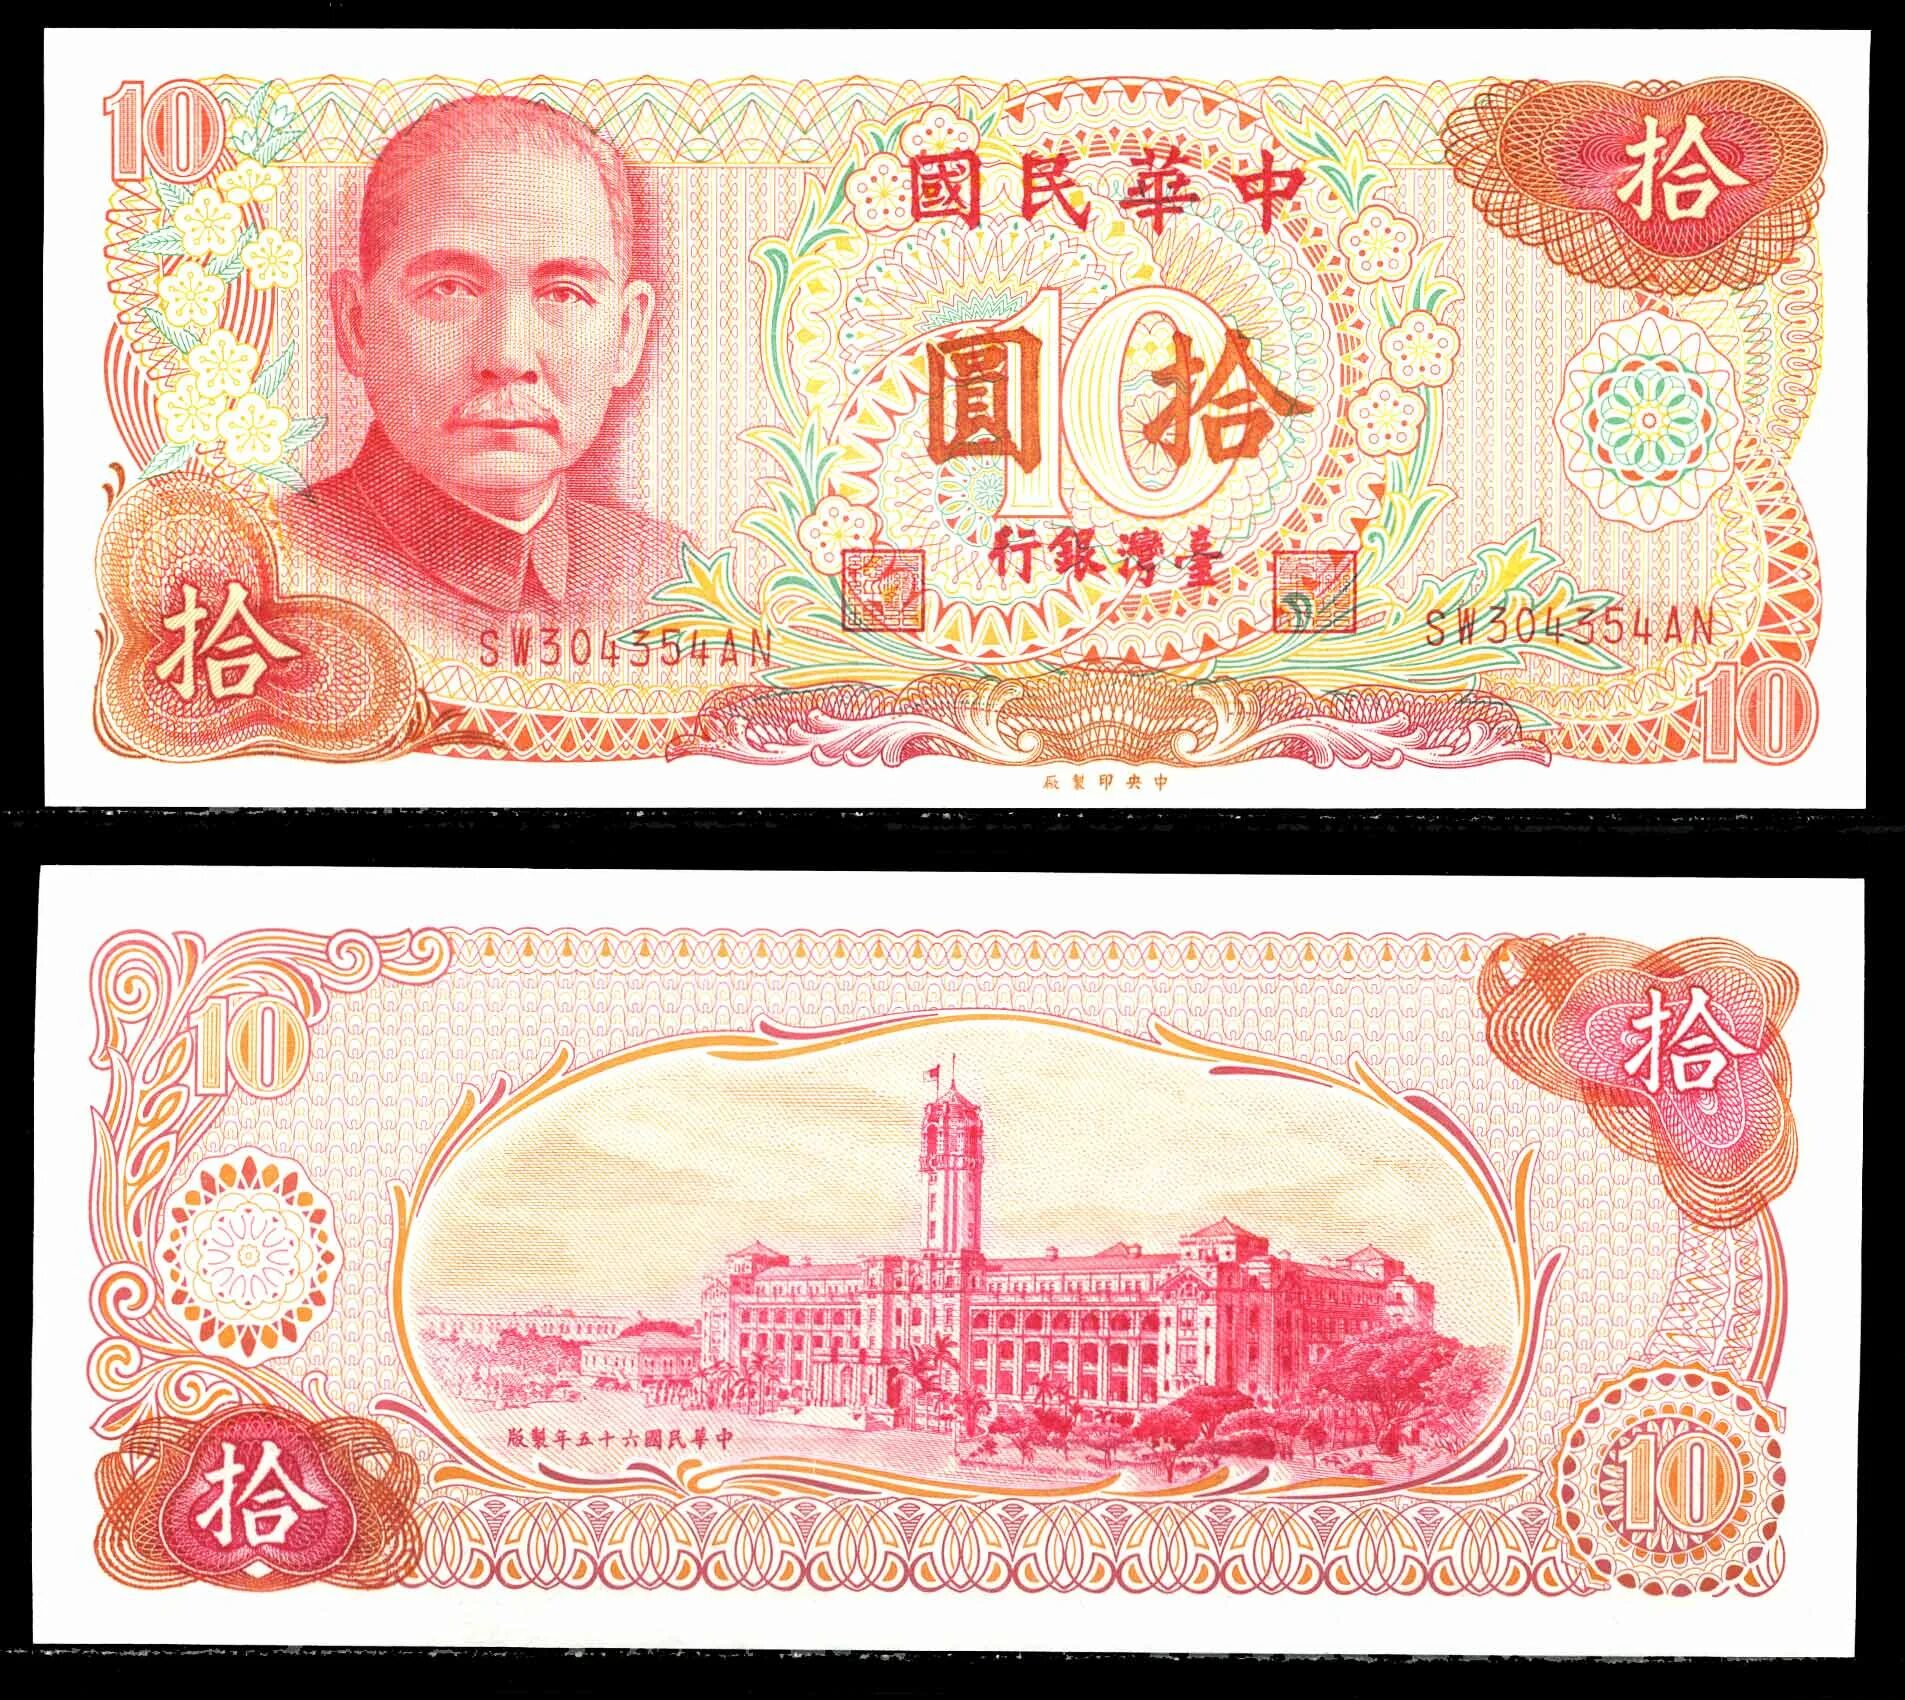 10 Юань банкнота Тайвань. Банкнота 100 юаней Тайвань. 10 Юаней Китай банкноты. Банкноты Тайваня 2020.